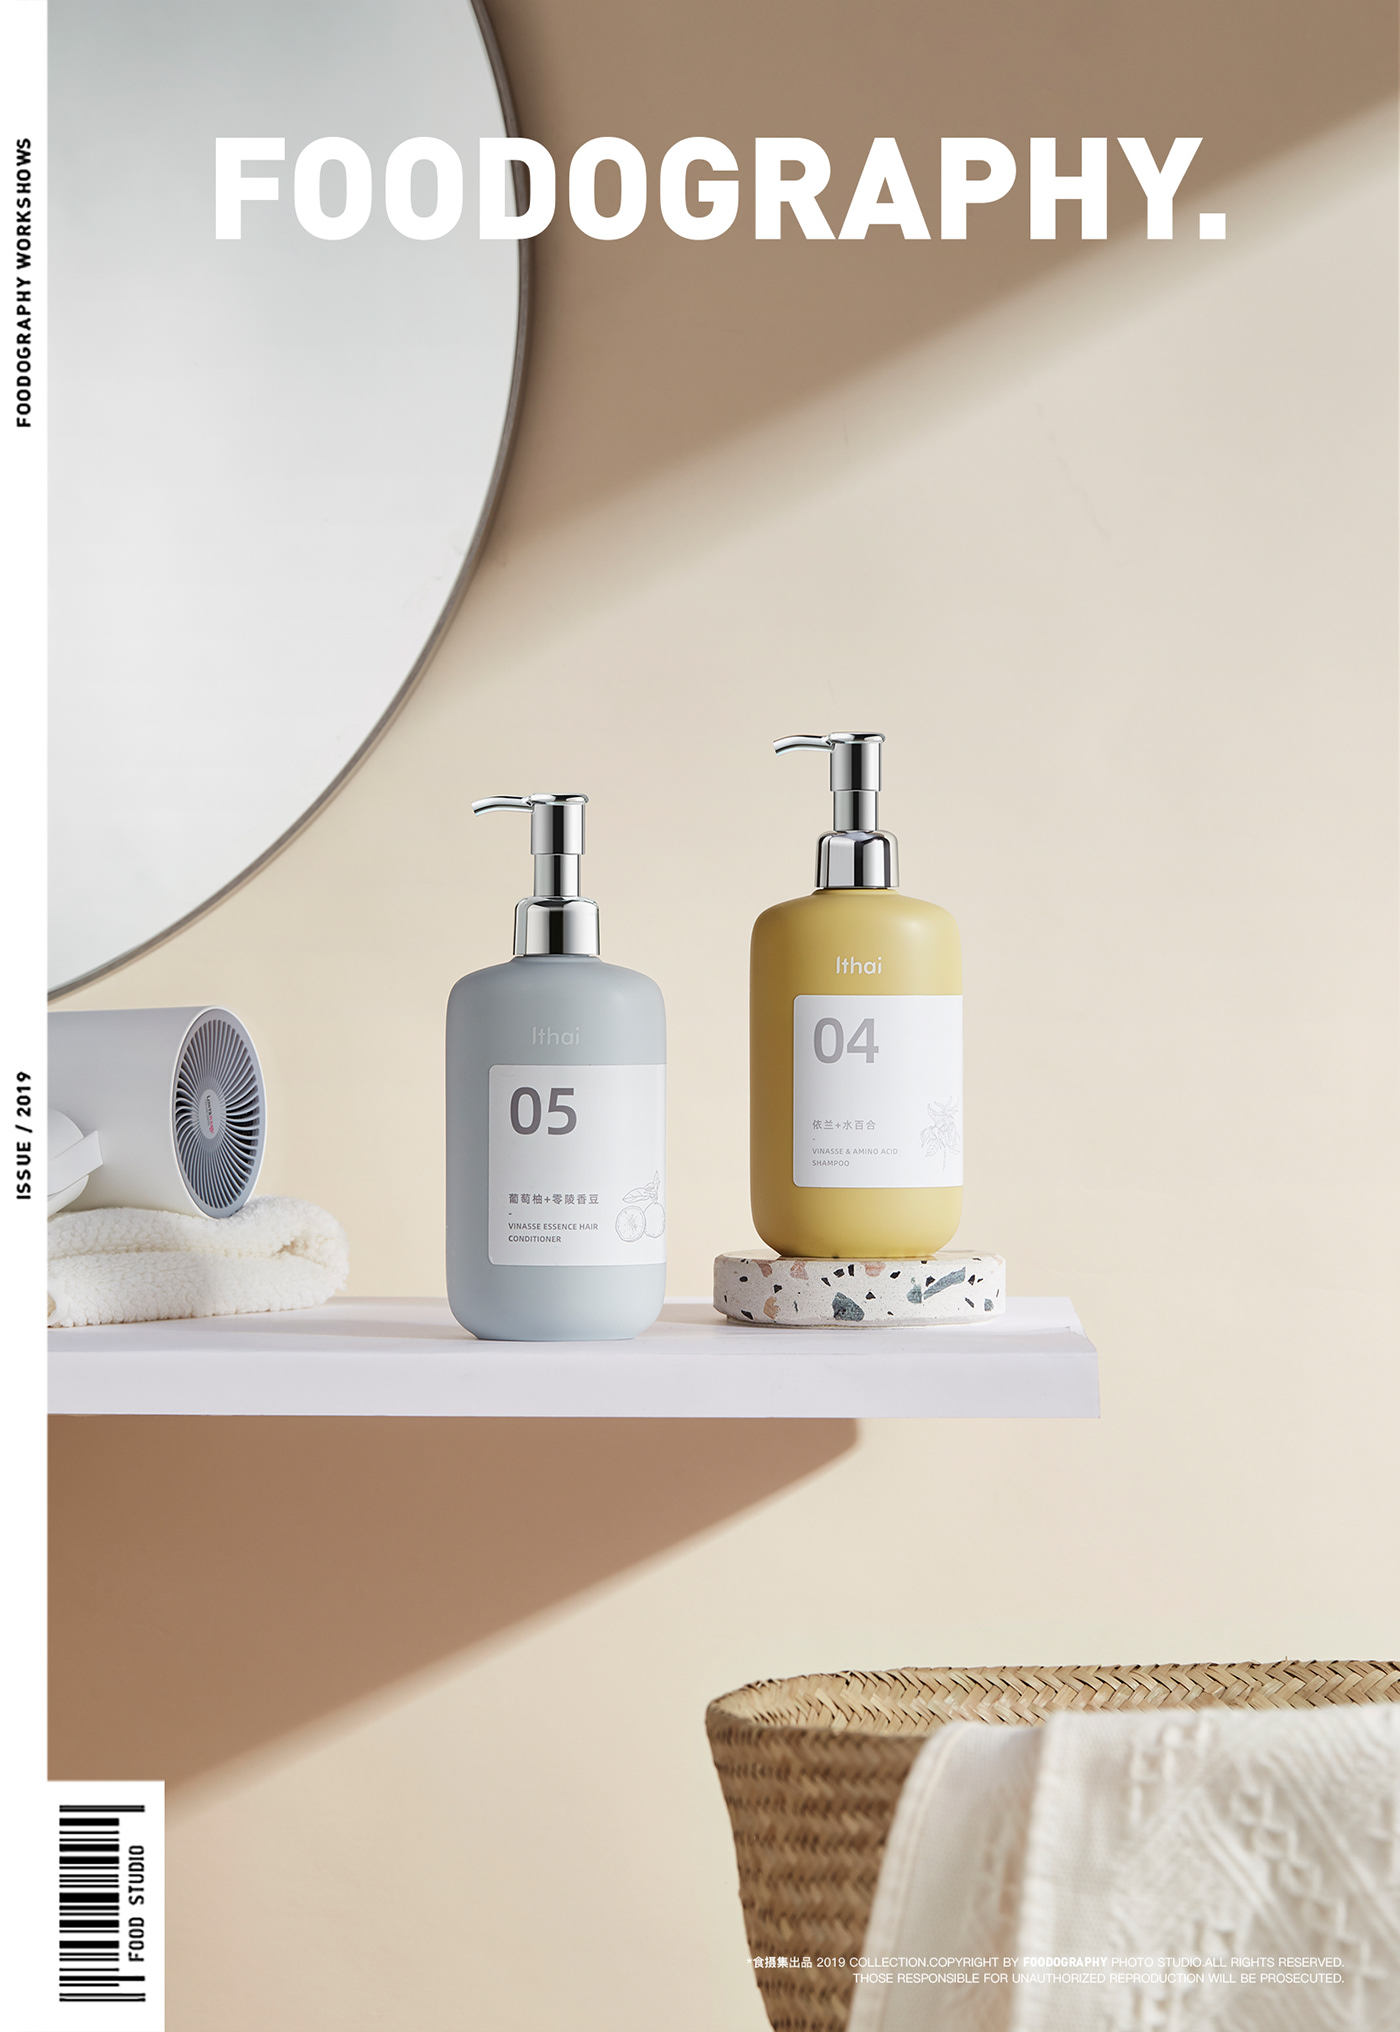 shampoo shower gel 洗发水 沐浴露 japan 日本 洗护 photo 产品摄影 Product Photography